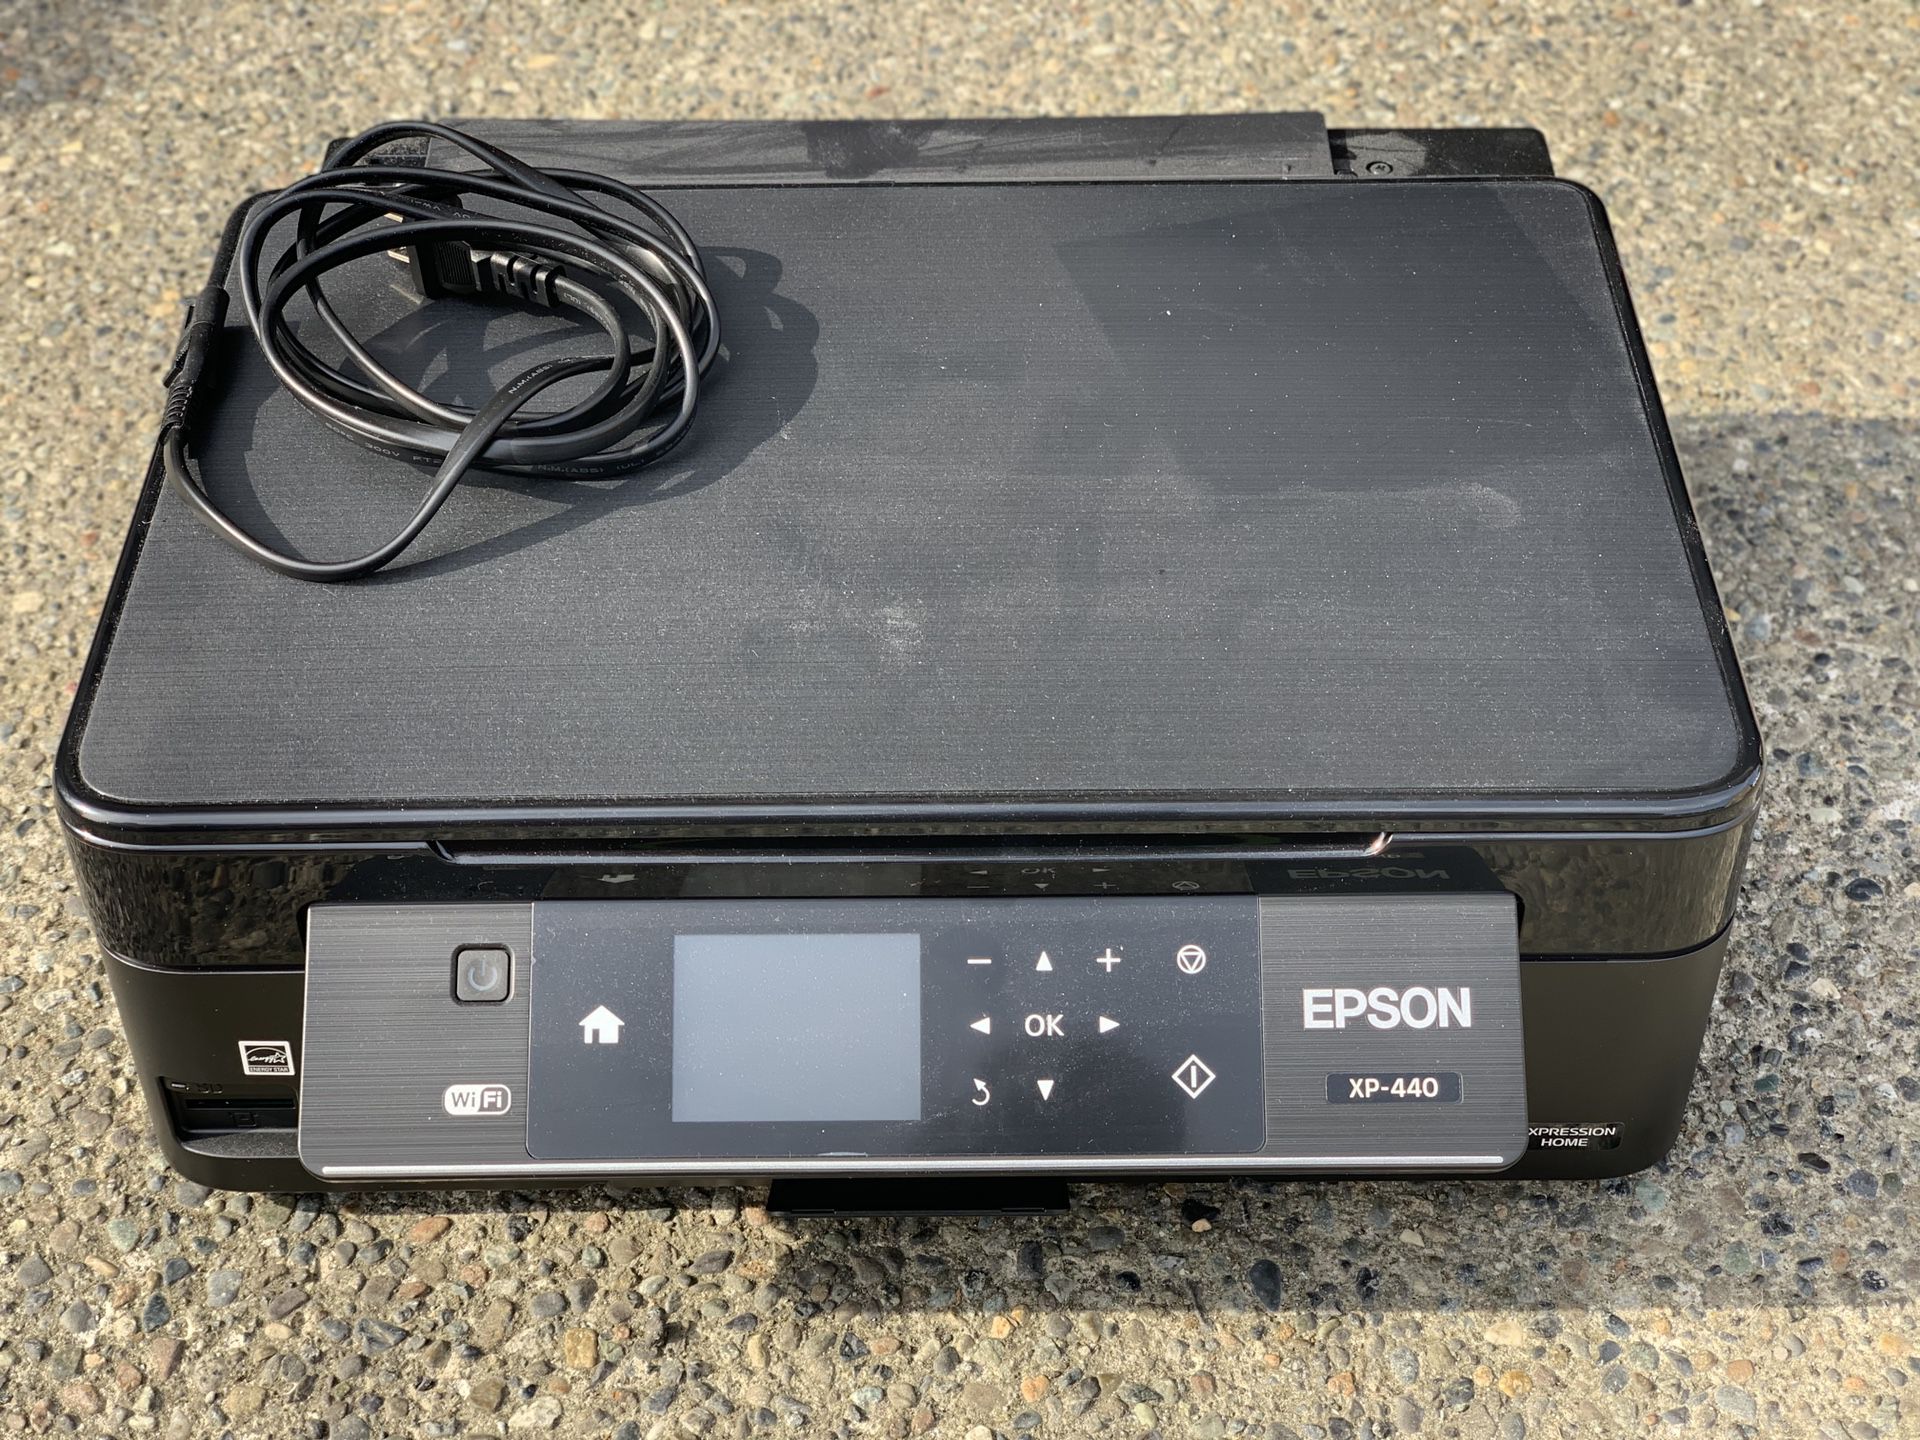 Epson XP-440 Color Printer/Scanner